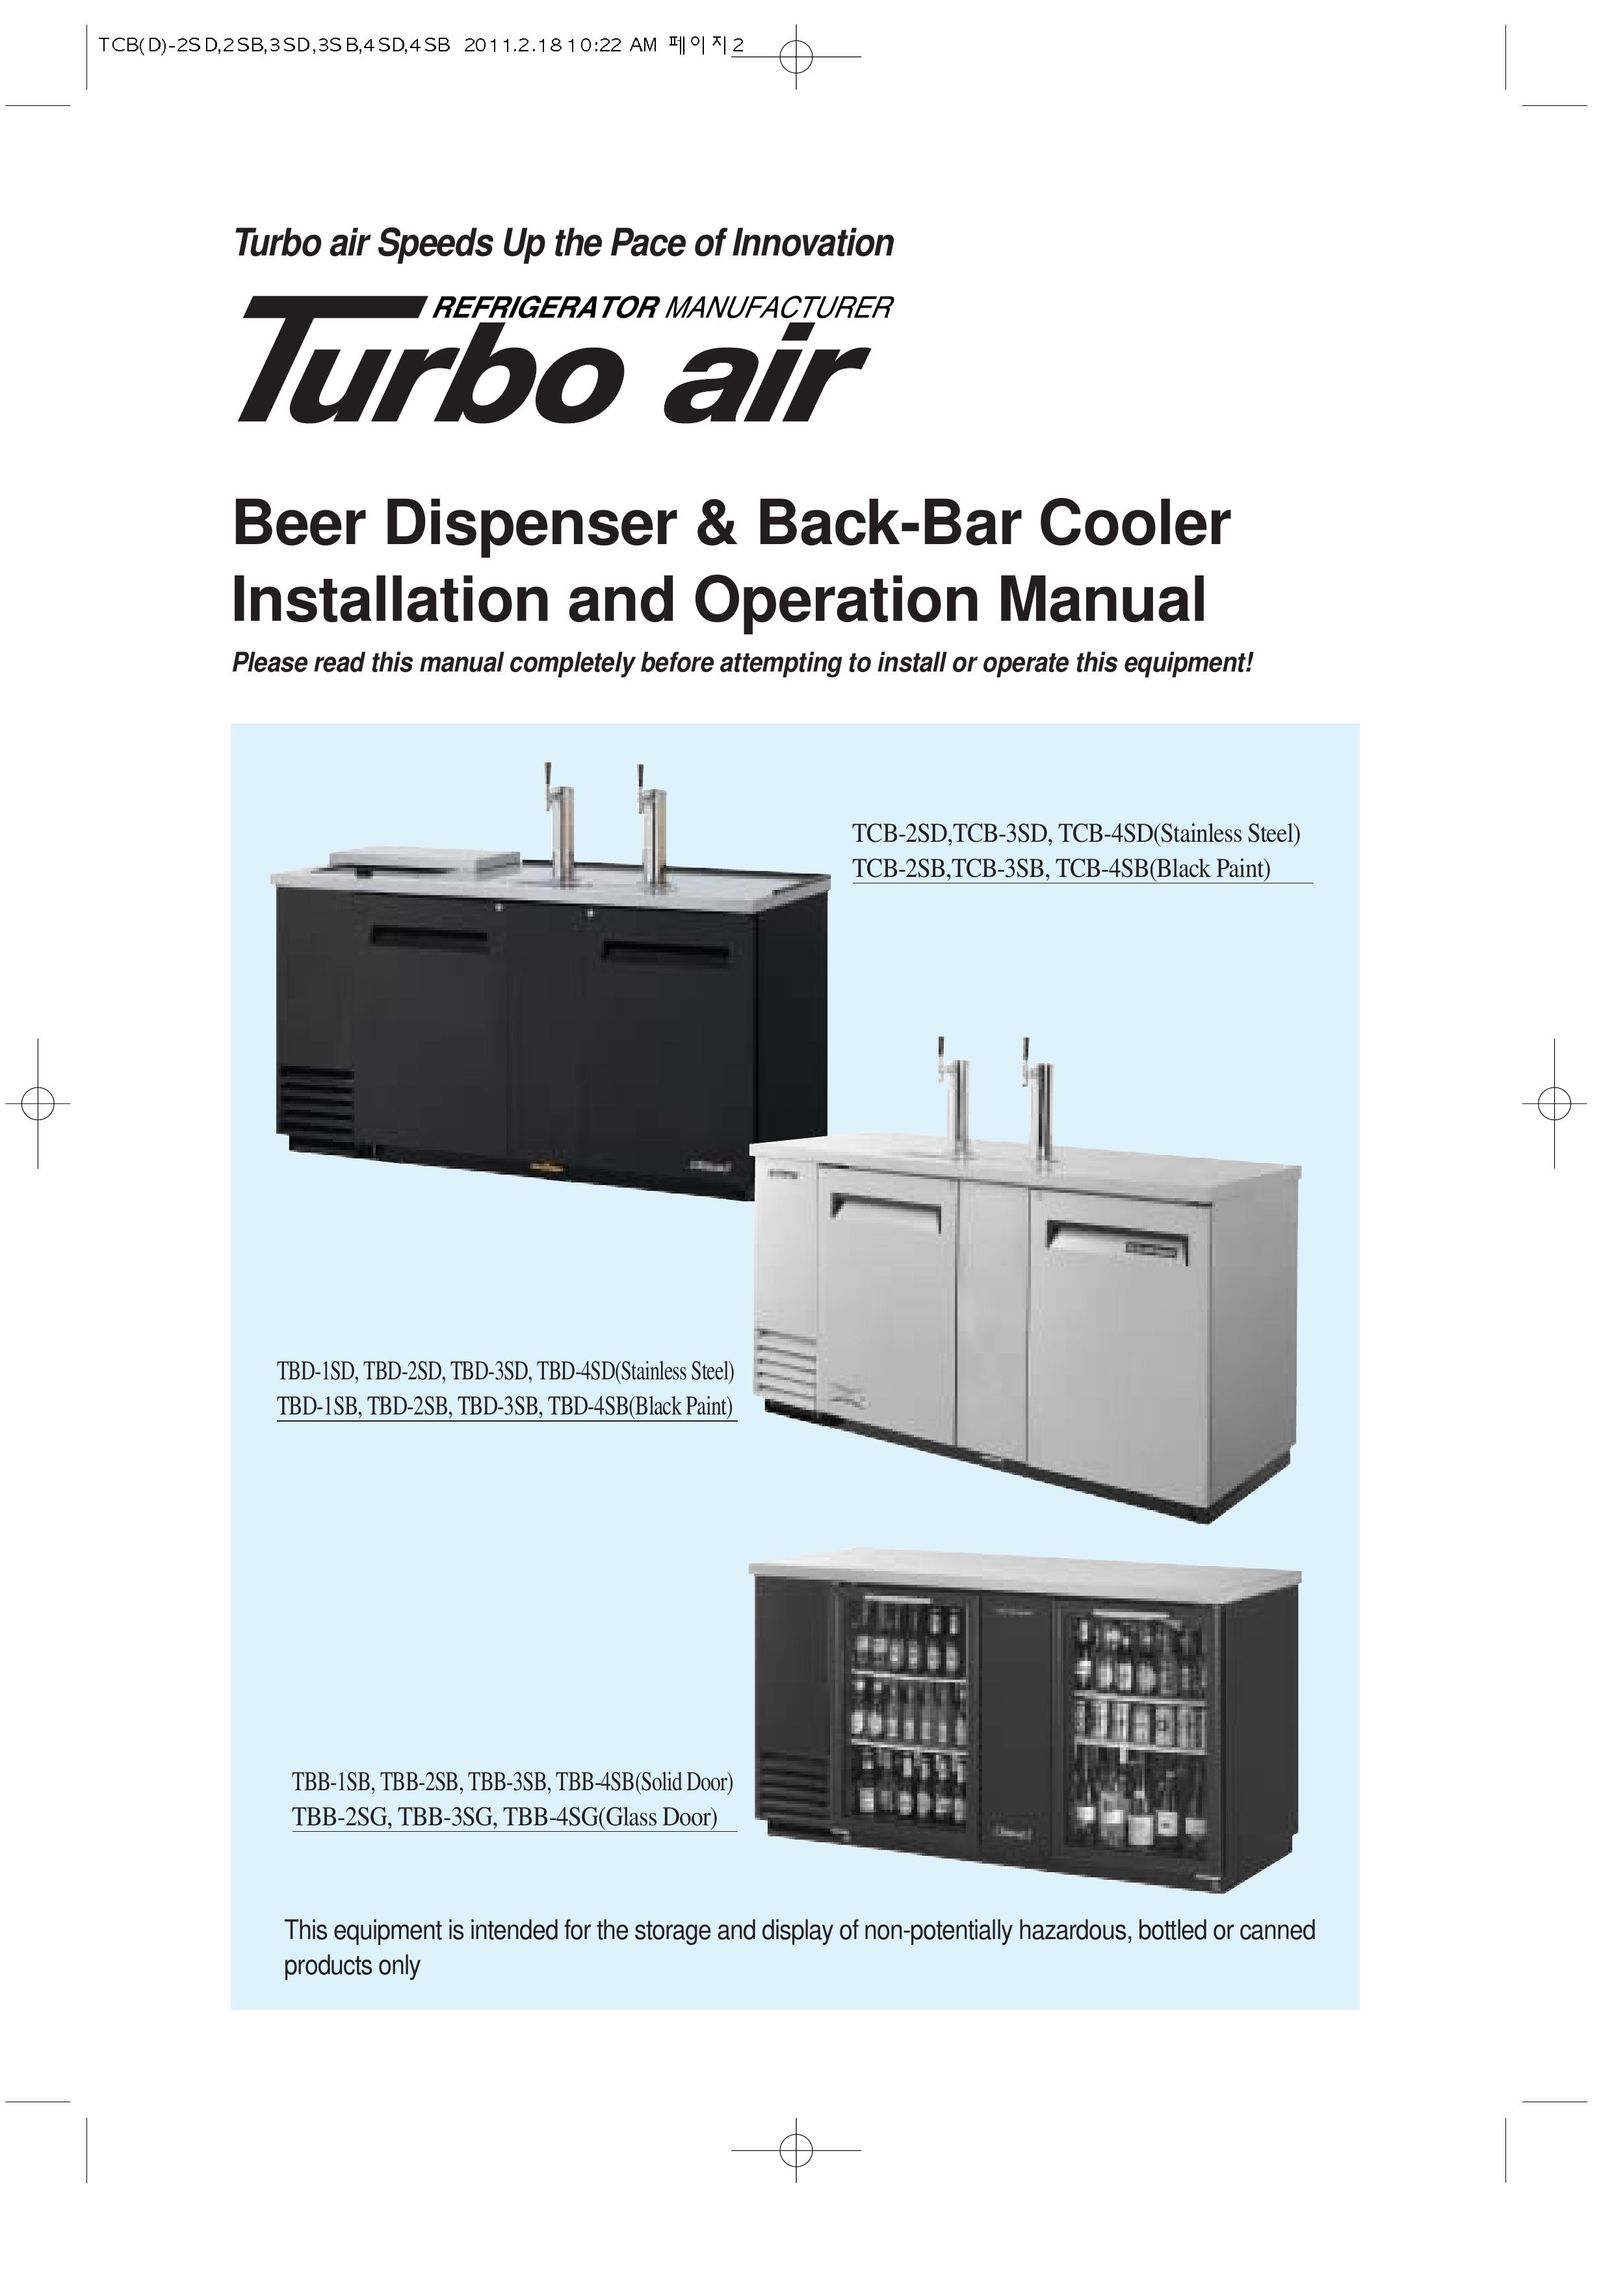 Turbo Air TBD-4SD Beverage Dispenser User Manual